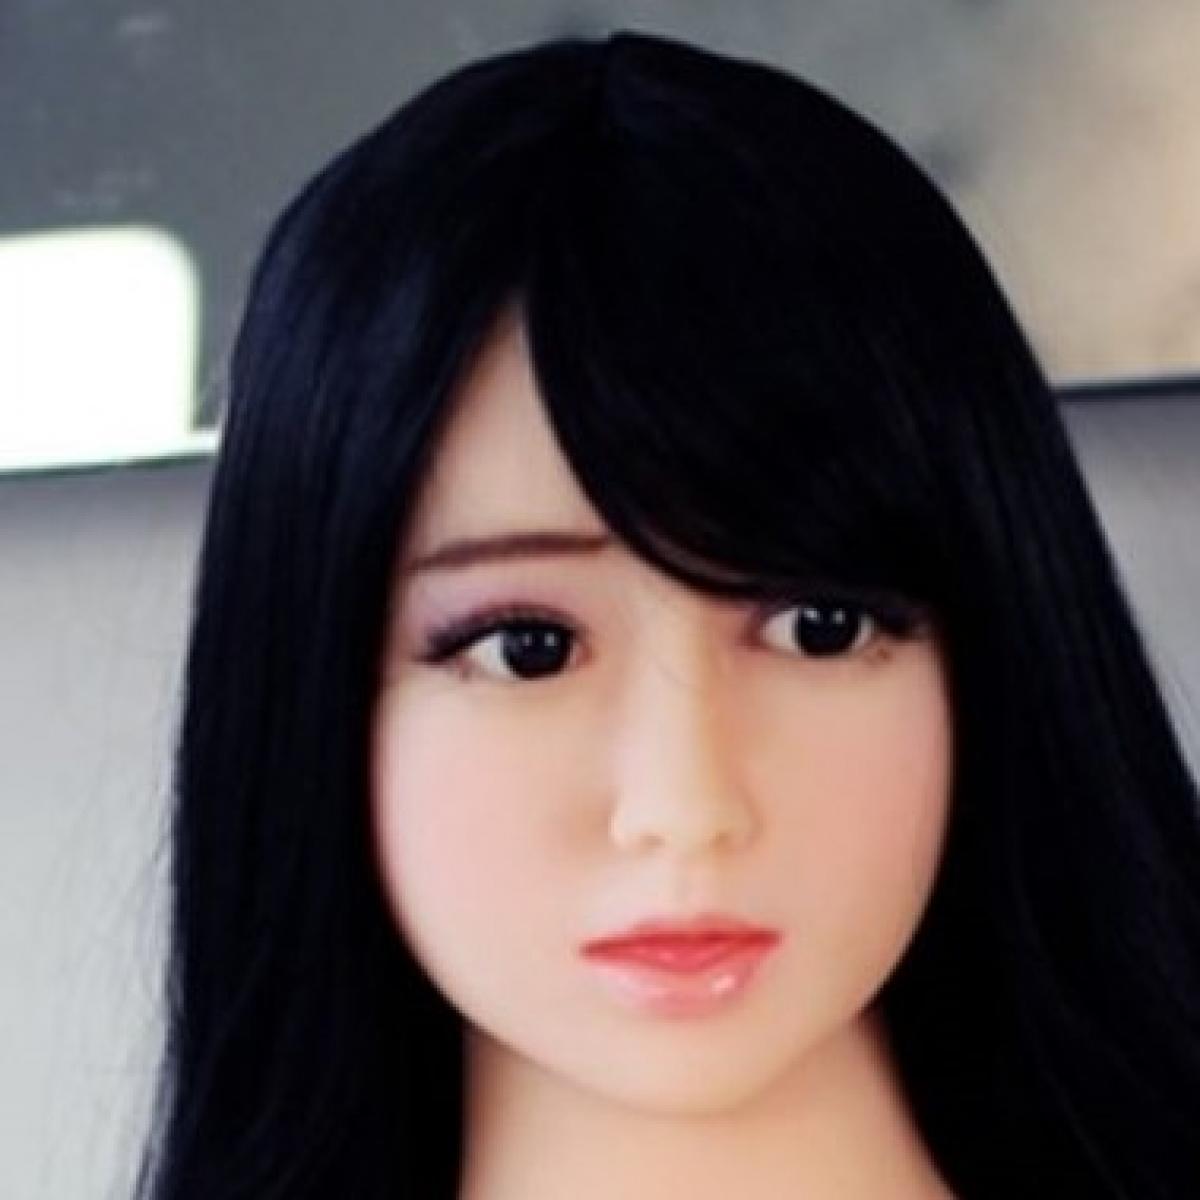 Neodoll Sugar Babe - Akili Head - Sex Doll Head - M16 Compatible - Natural